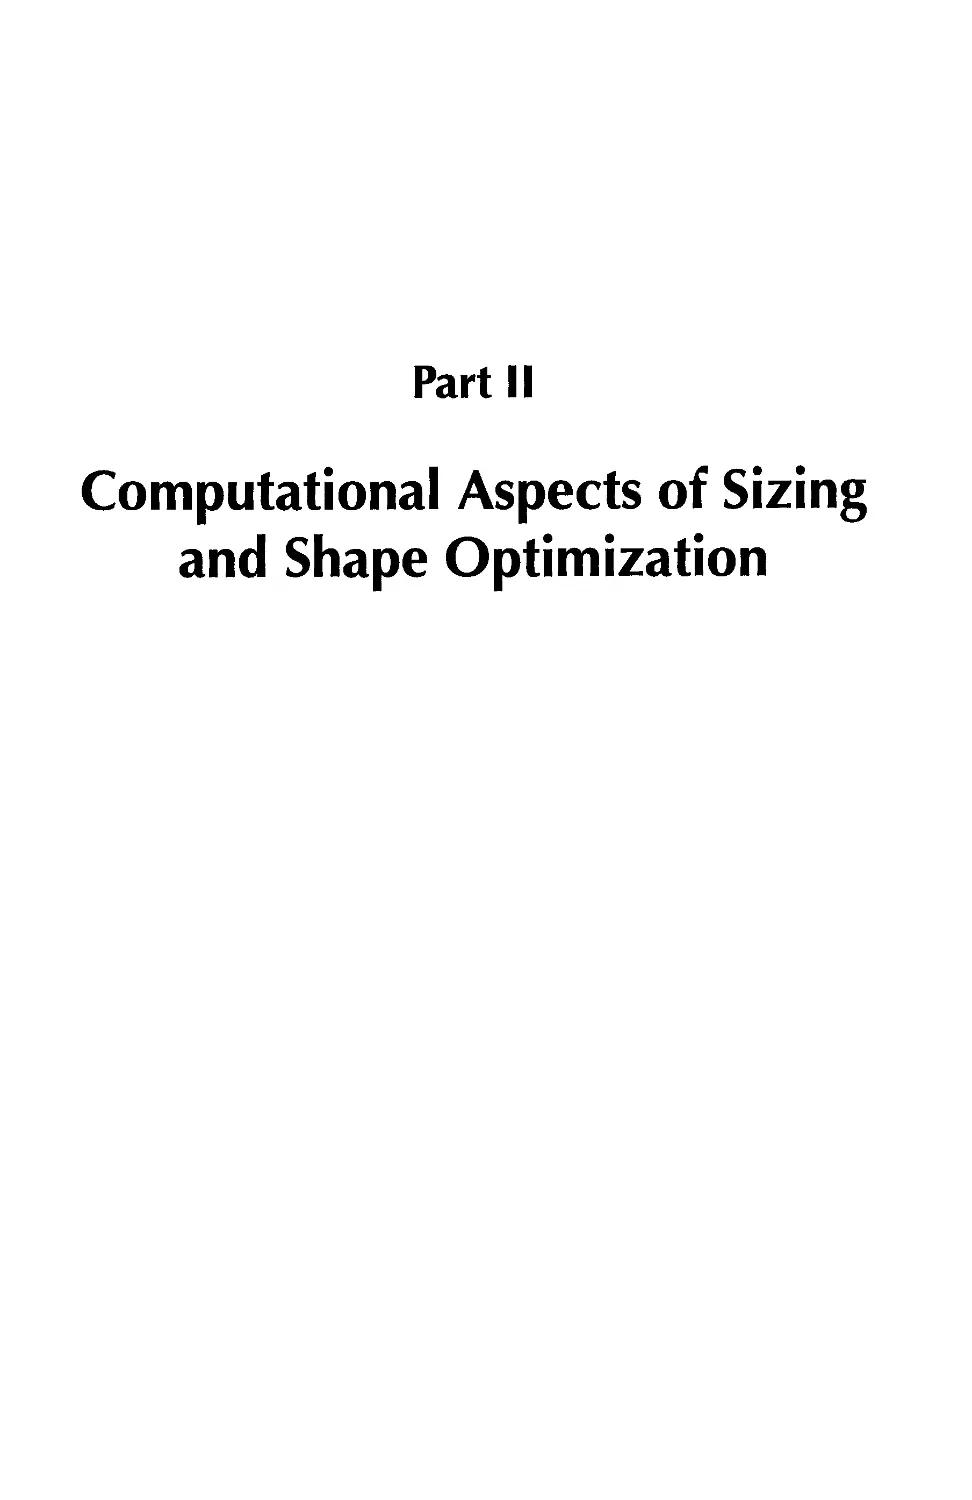 Part II Computational Aspects of Sizing and Shape Optimization